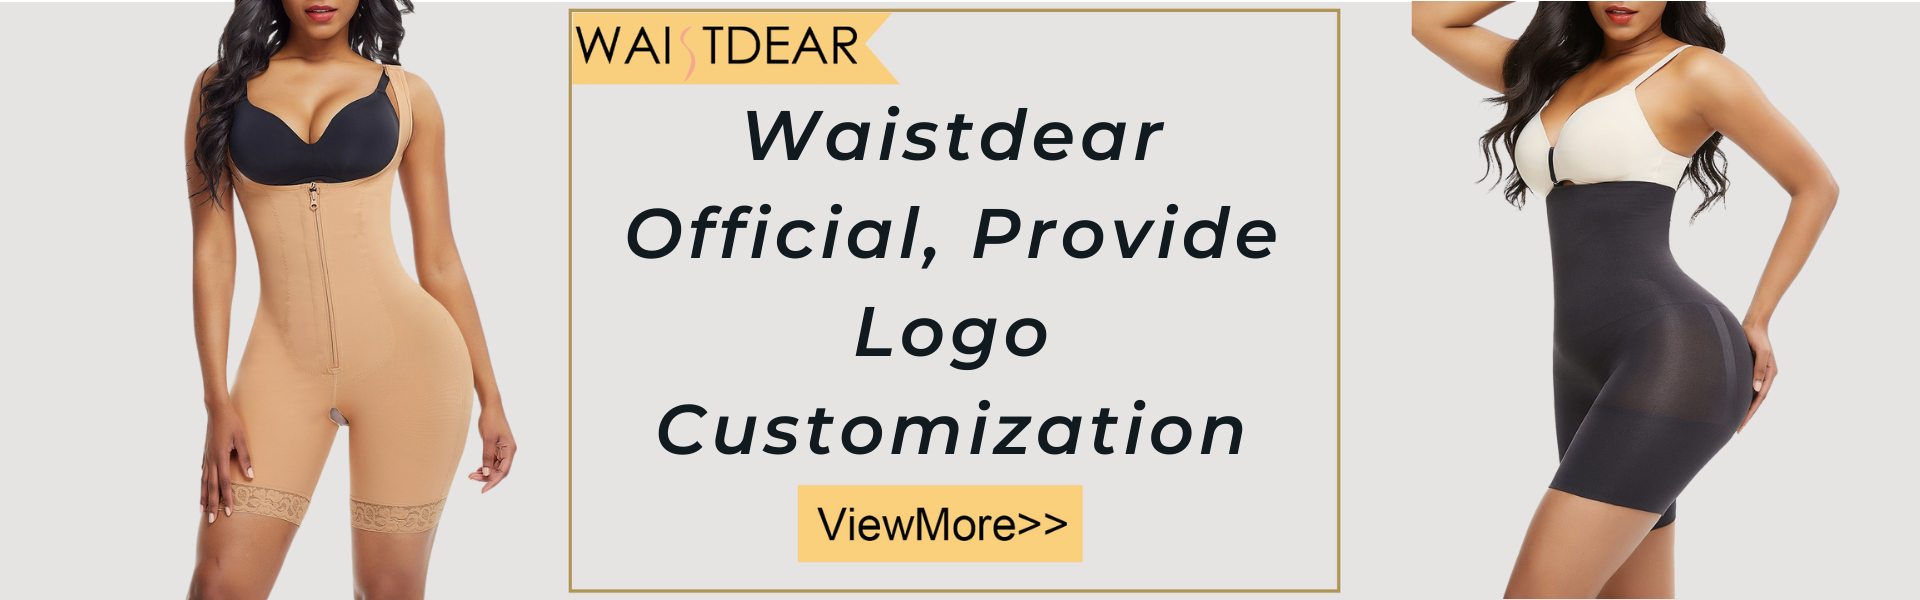 Waistdear Official, Provide Logo Customization